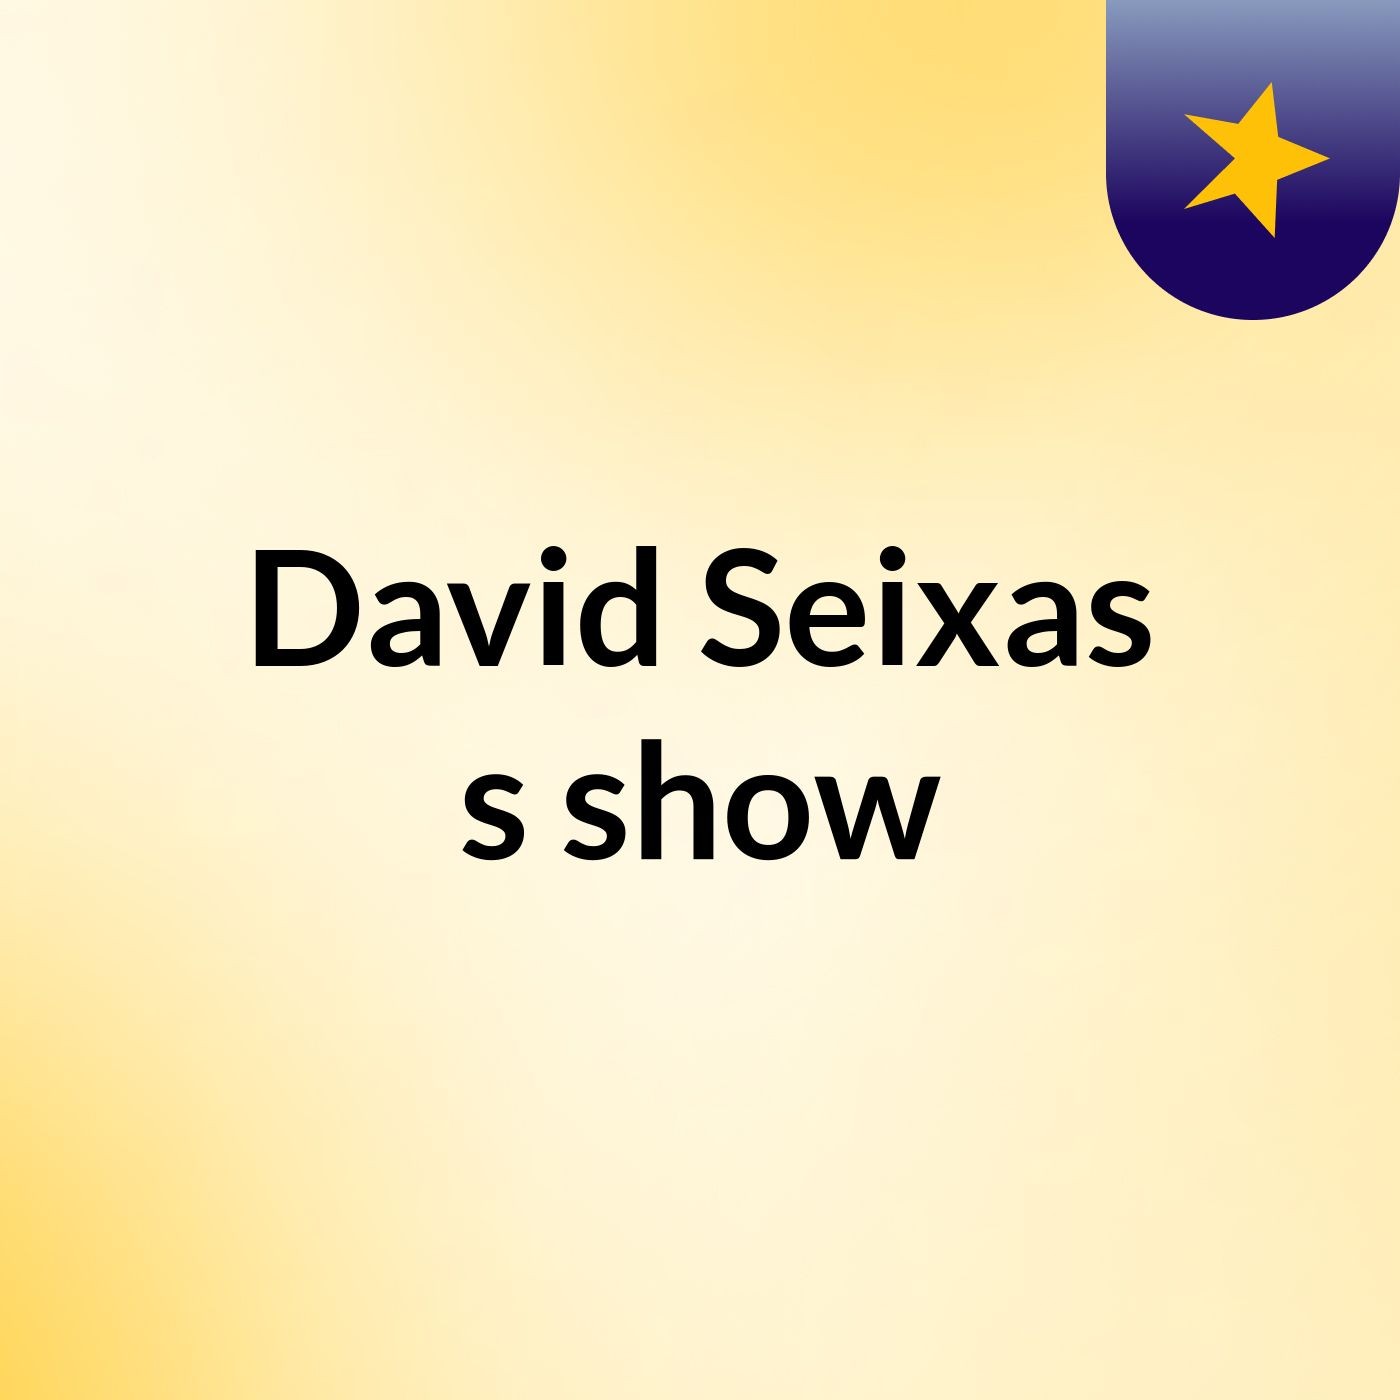 David Seixas's show